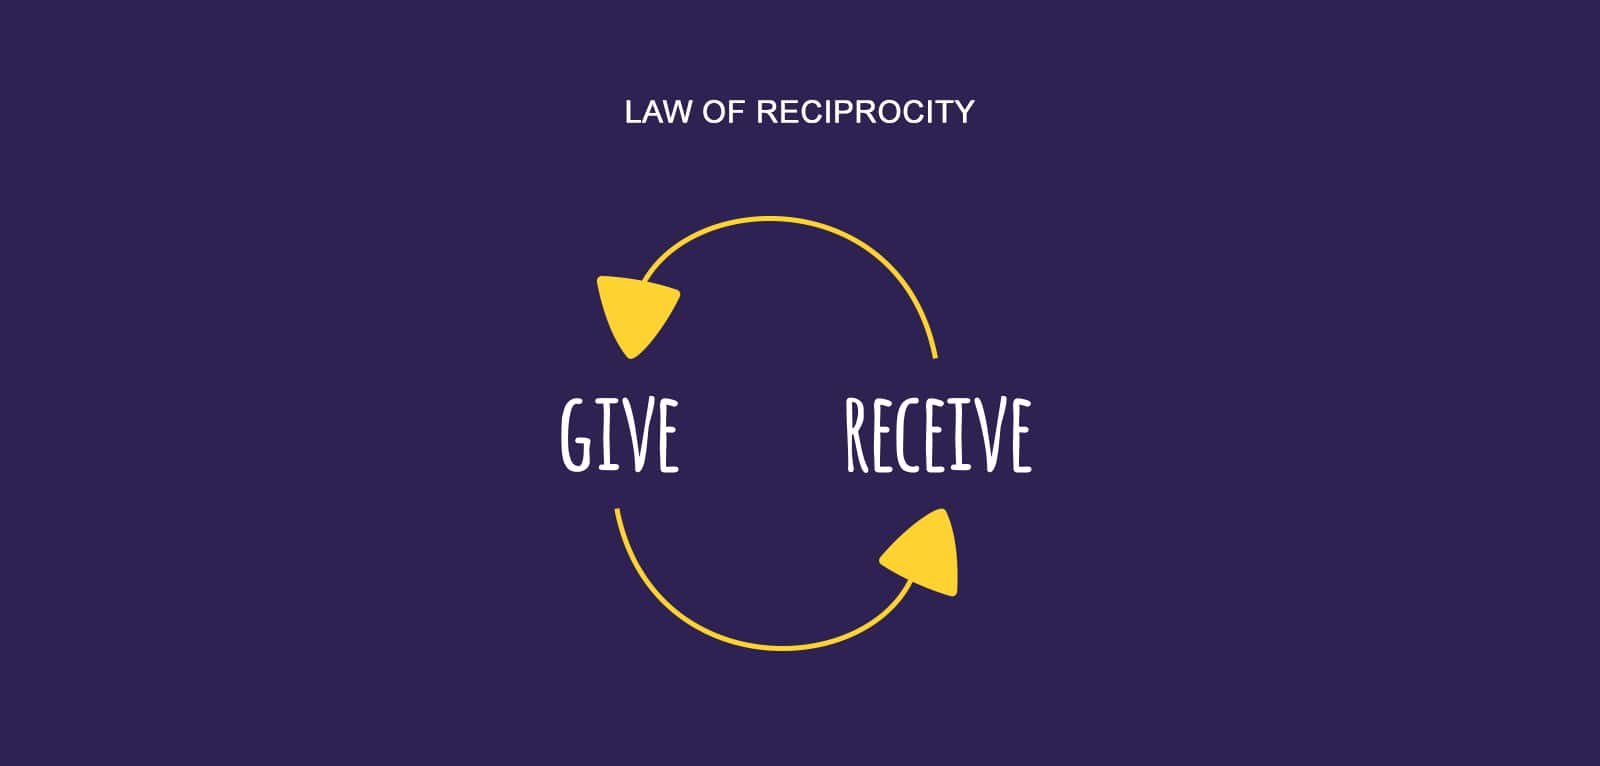 Law of reciprocity